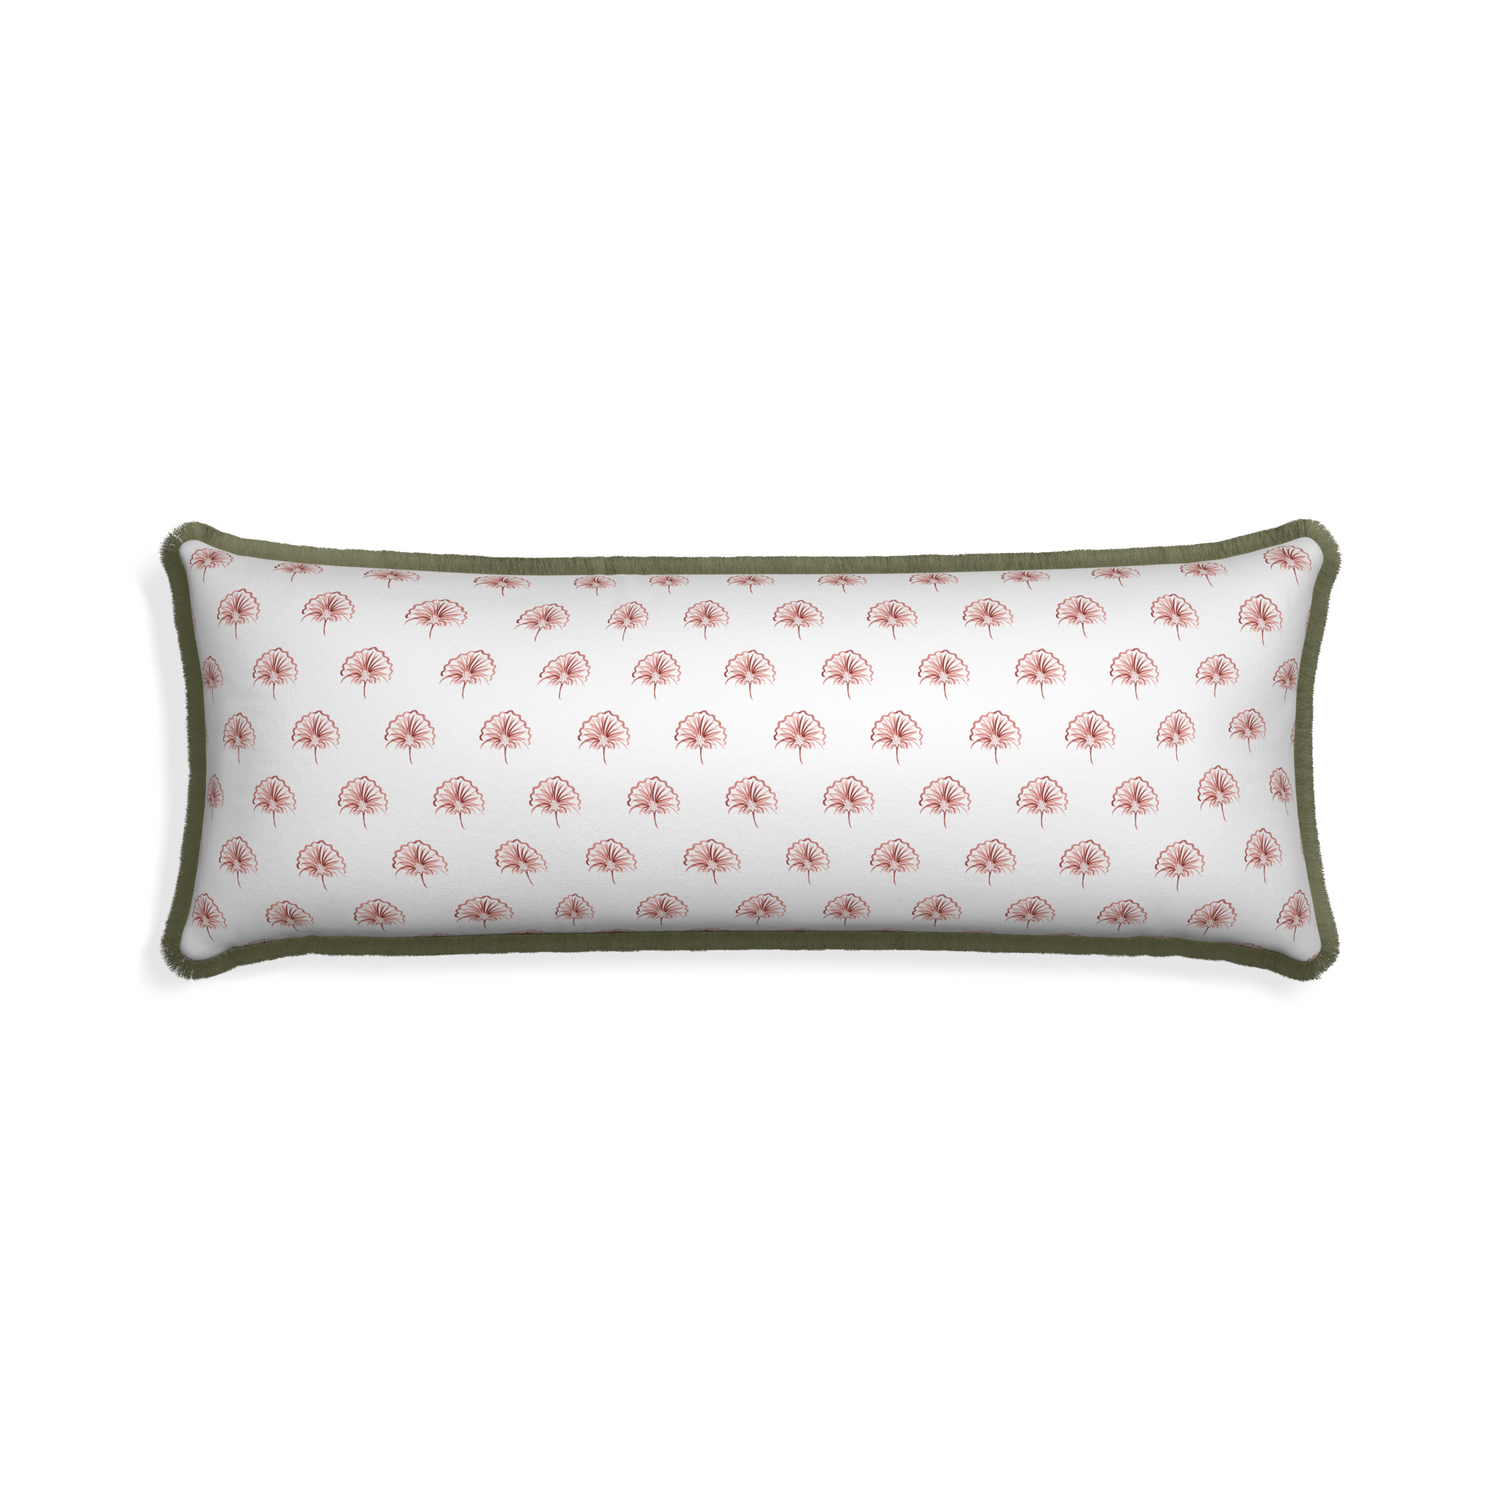 Xl-lumbar penelope rose custom pillow with sage fringe on white background